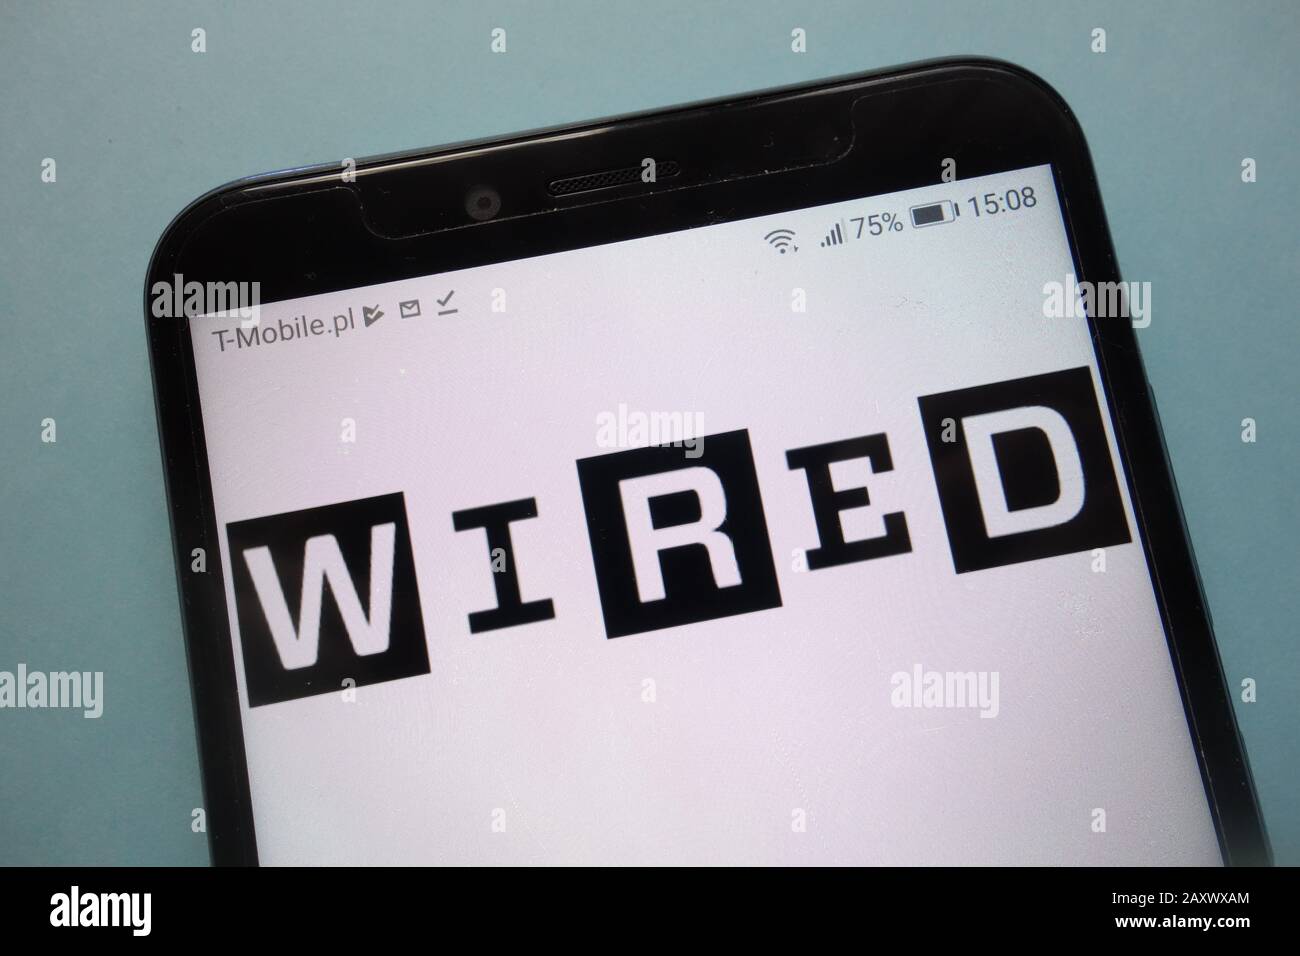 Wired magazine logo displayed on smartphone Stock Photo